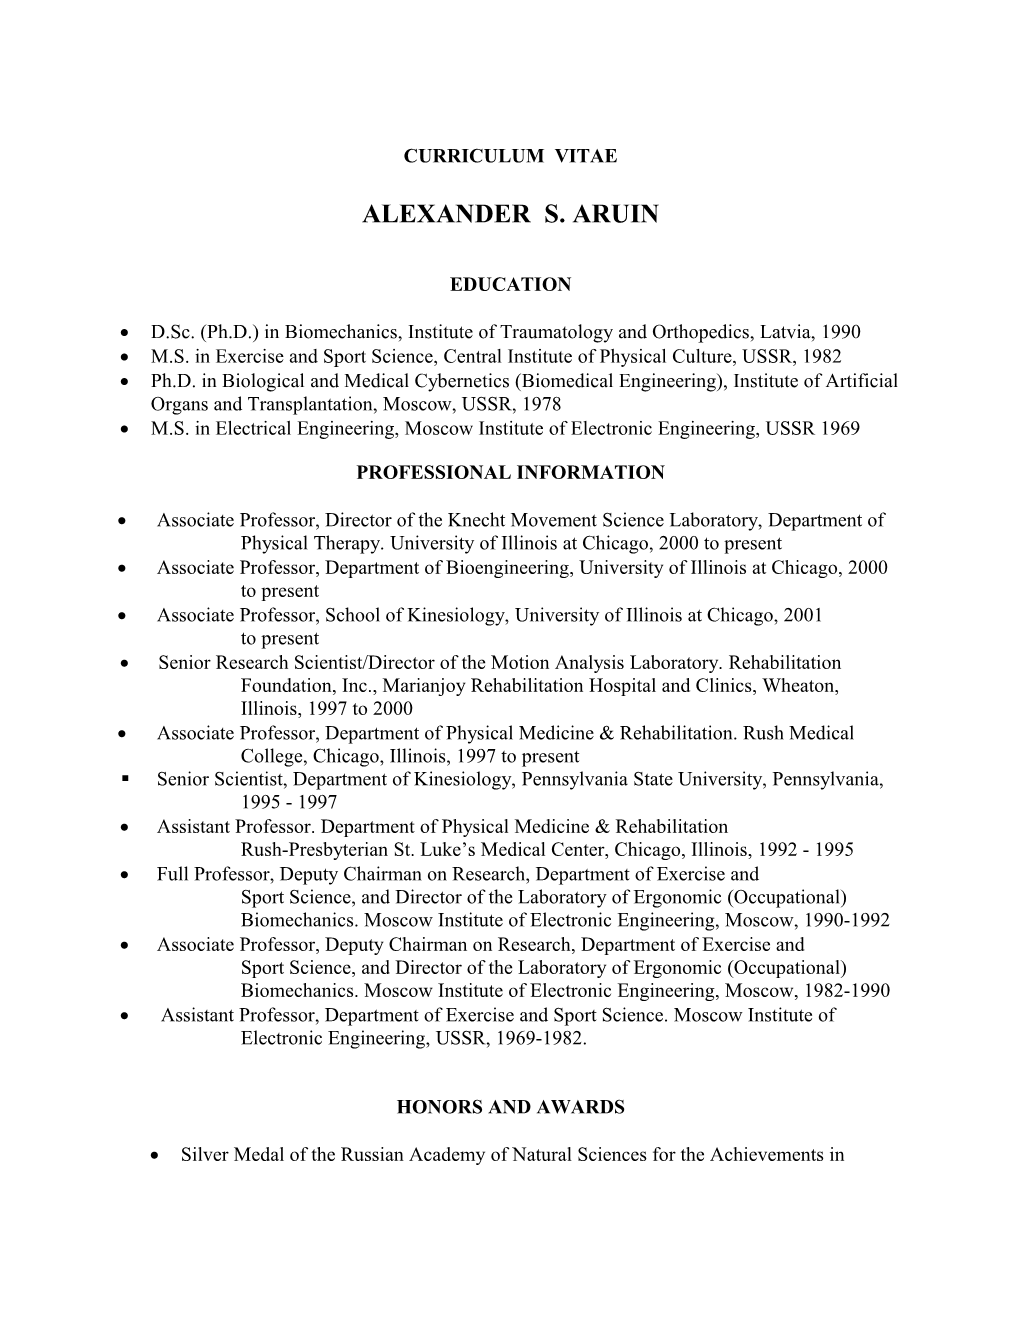 ALEXANDER S. ARUIN Page 22